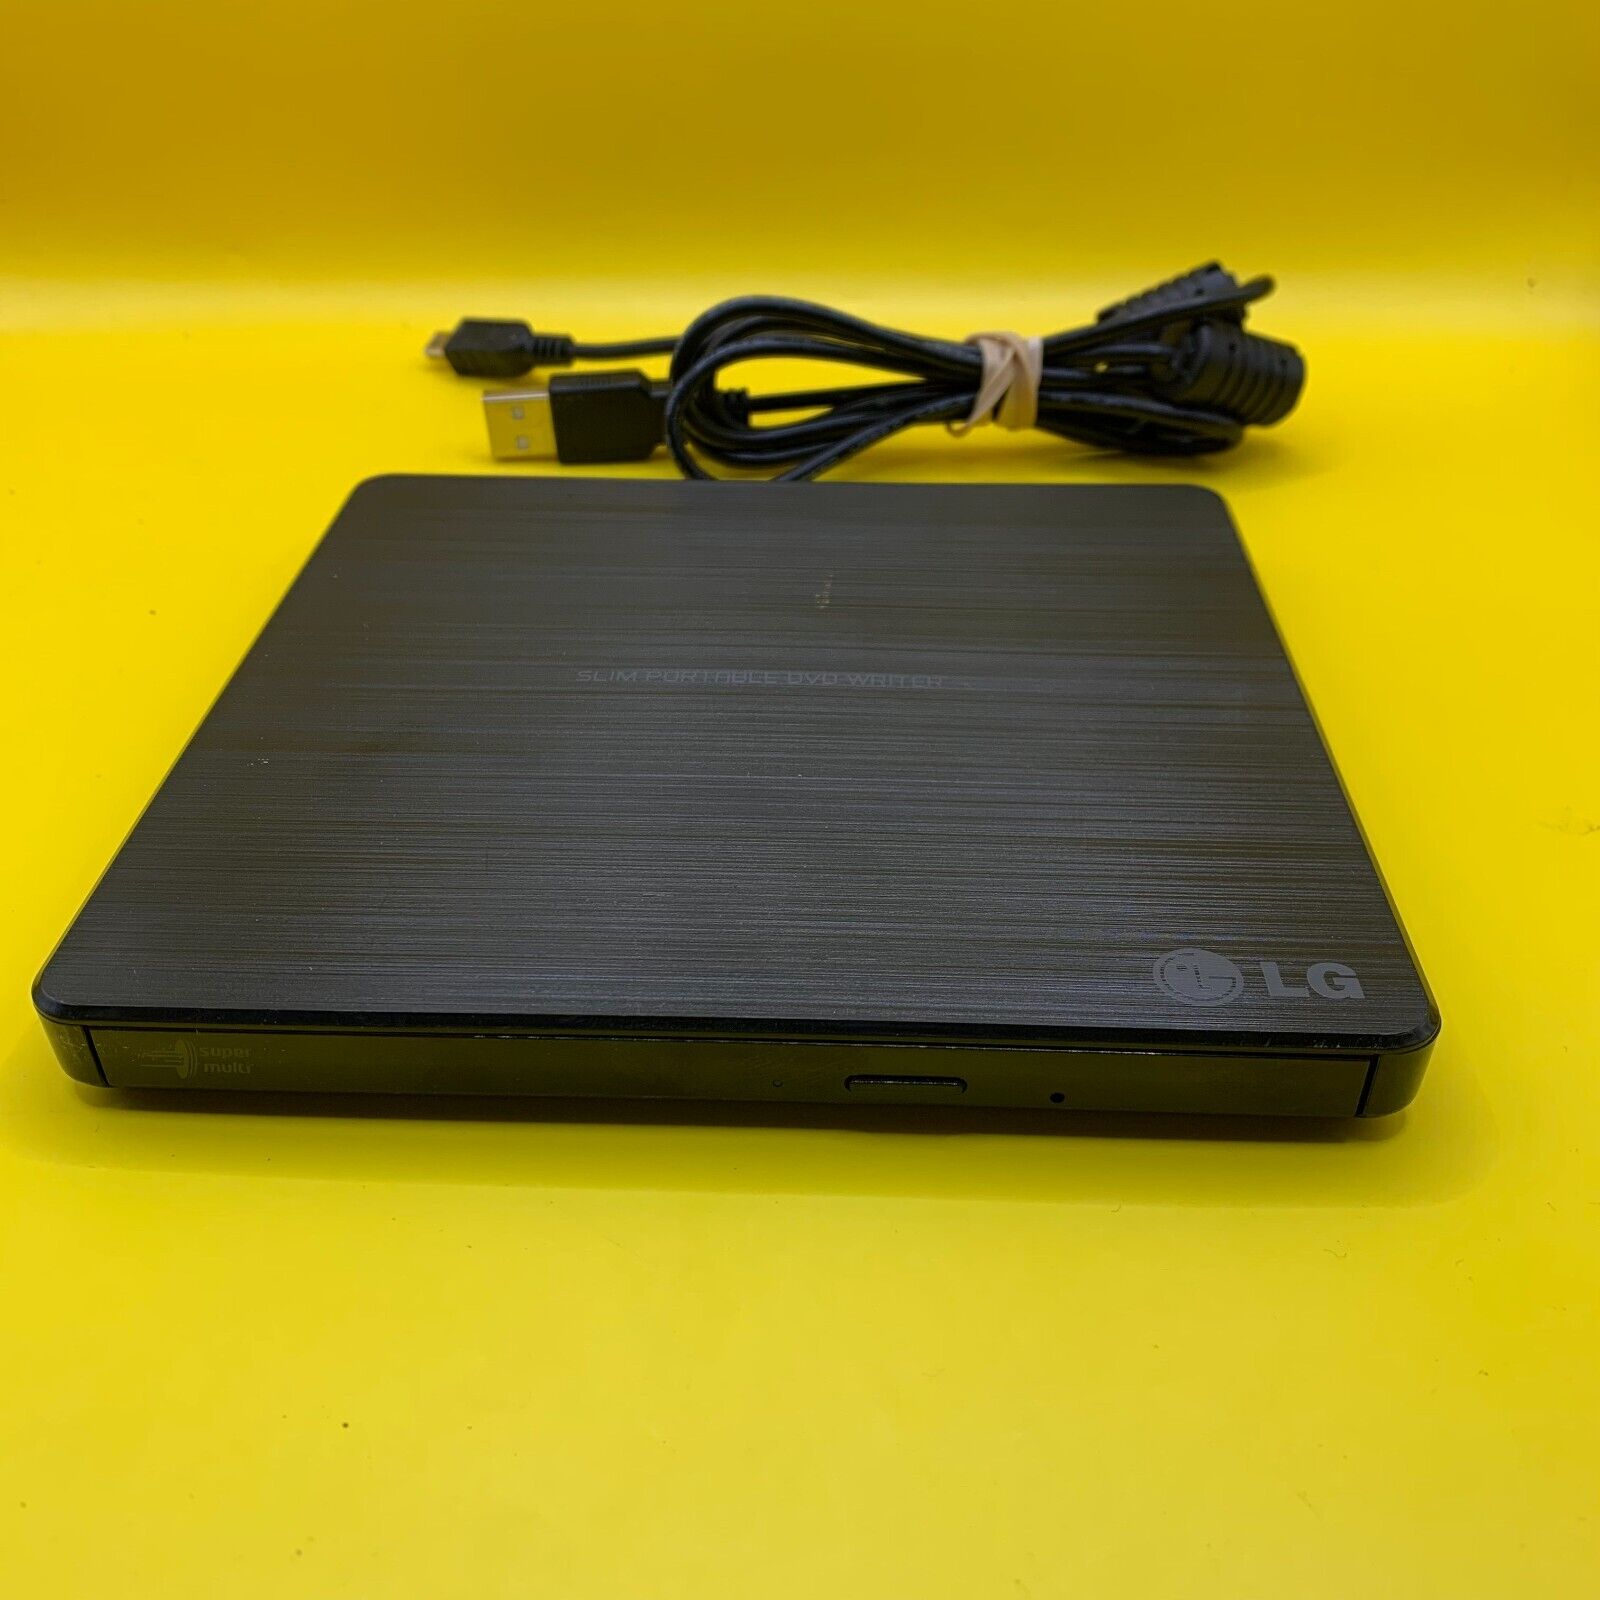 ⚡SHIPS SAME DAY⚡ LG Ultra Slim Portable External USB DVD Writer Drive SP80NB80